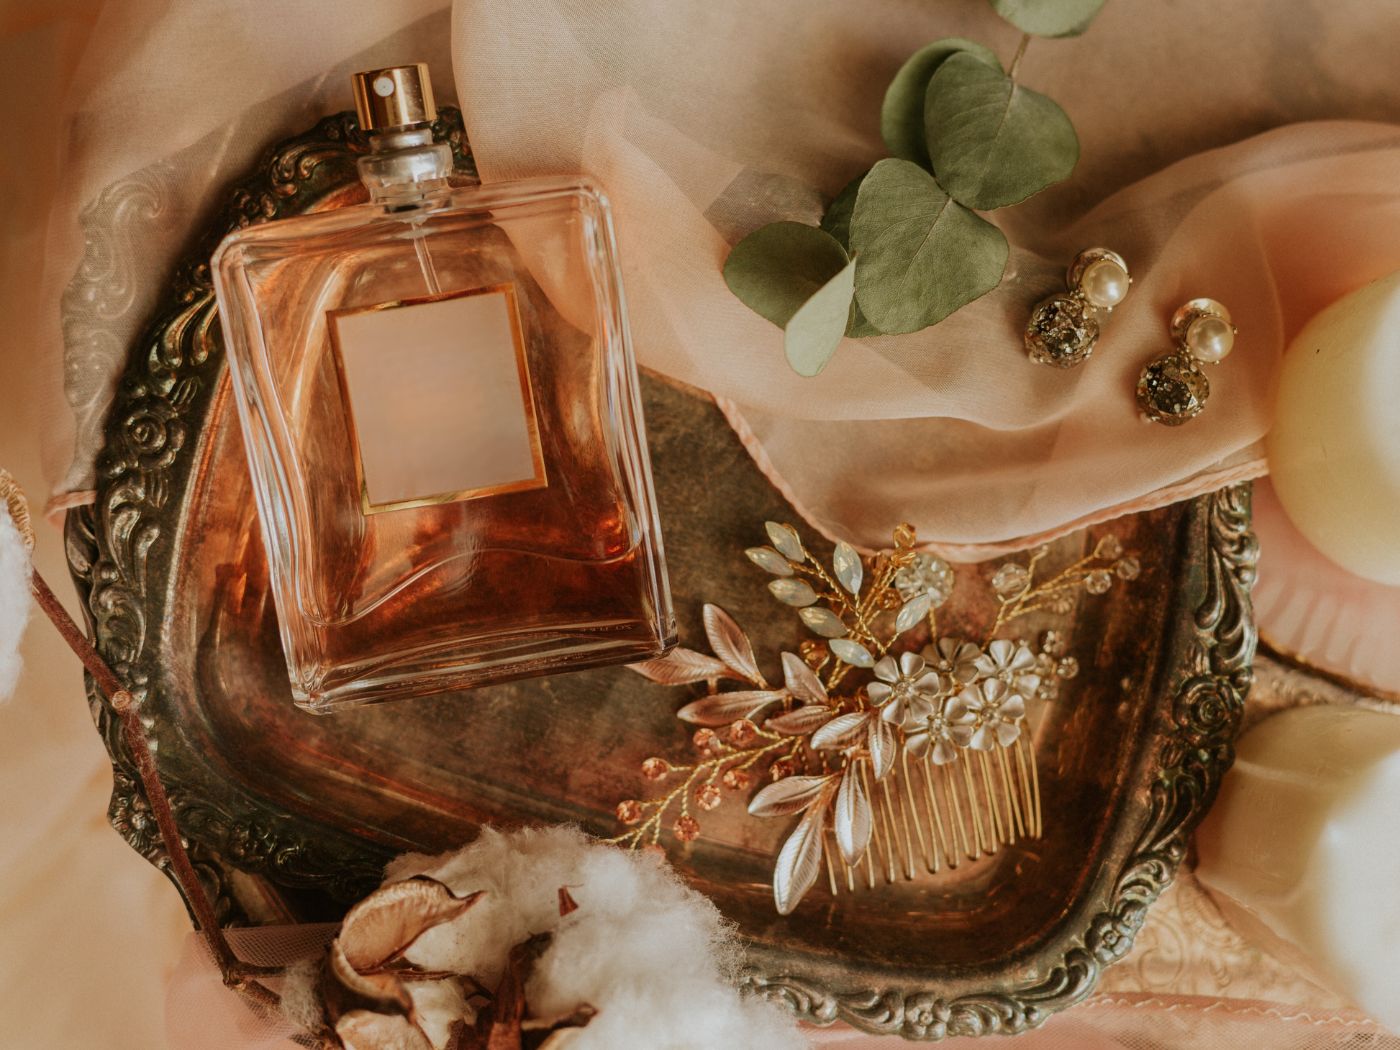 Perfume bottle nestled among tulle and jewelry and eucalyptus